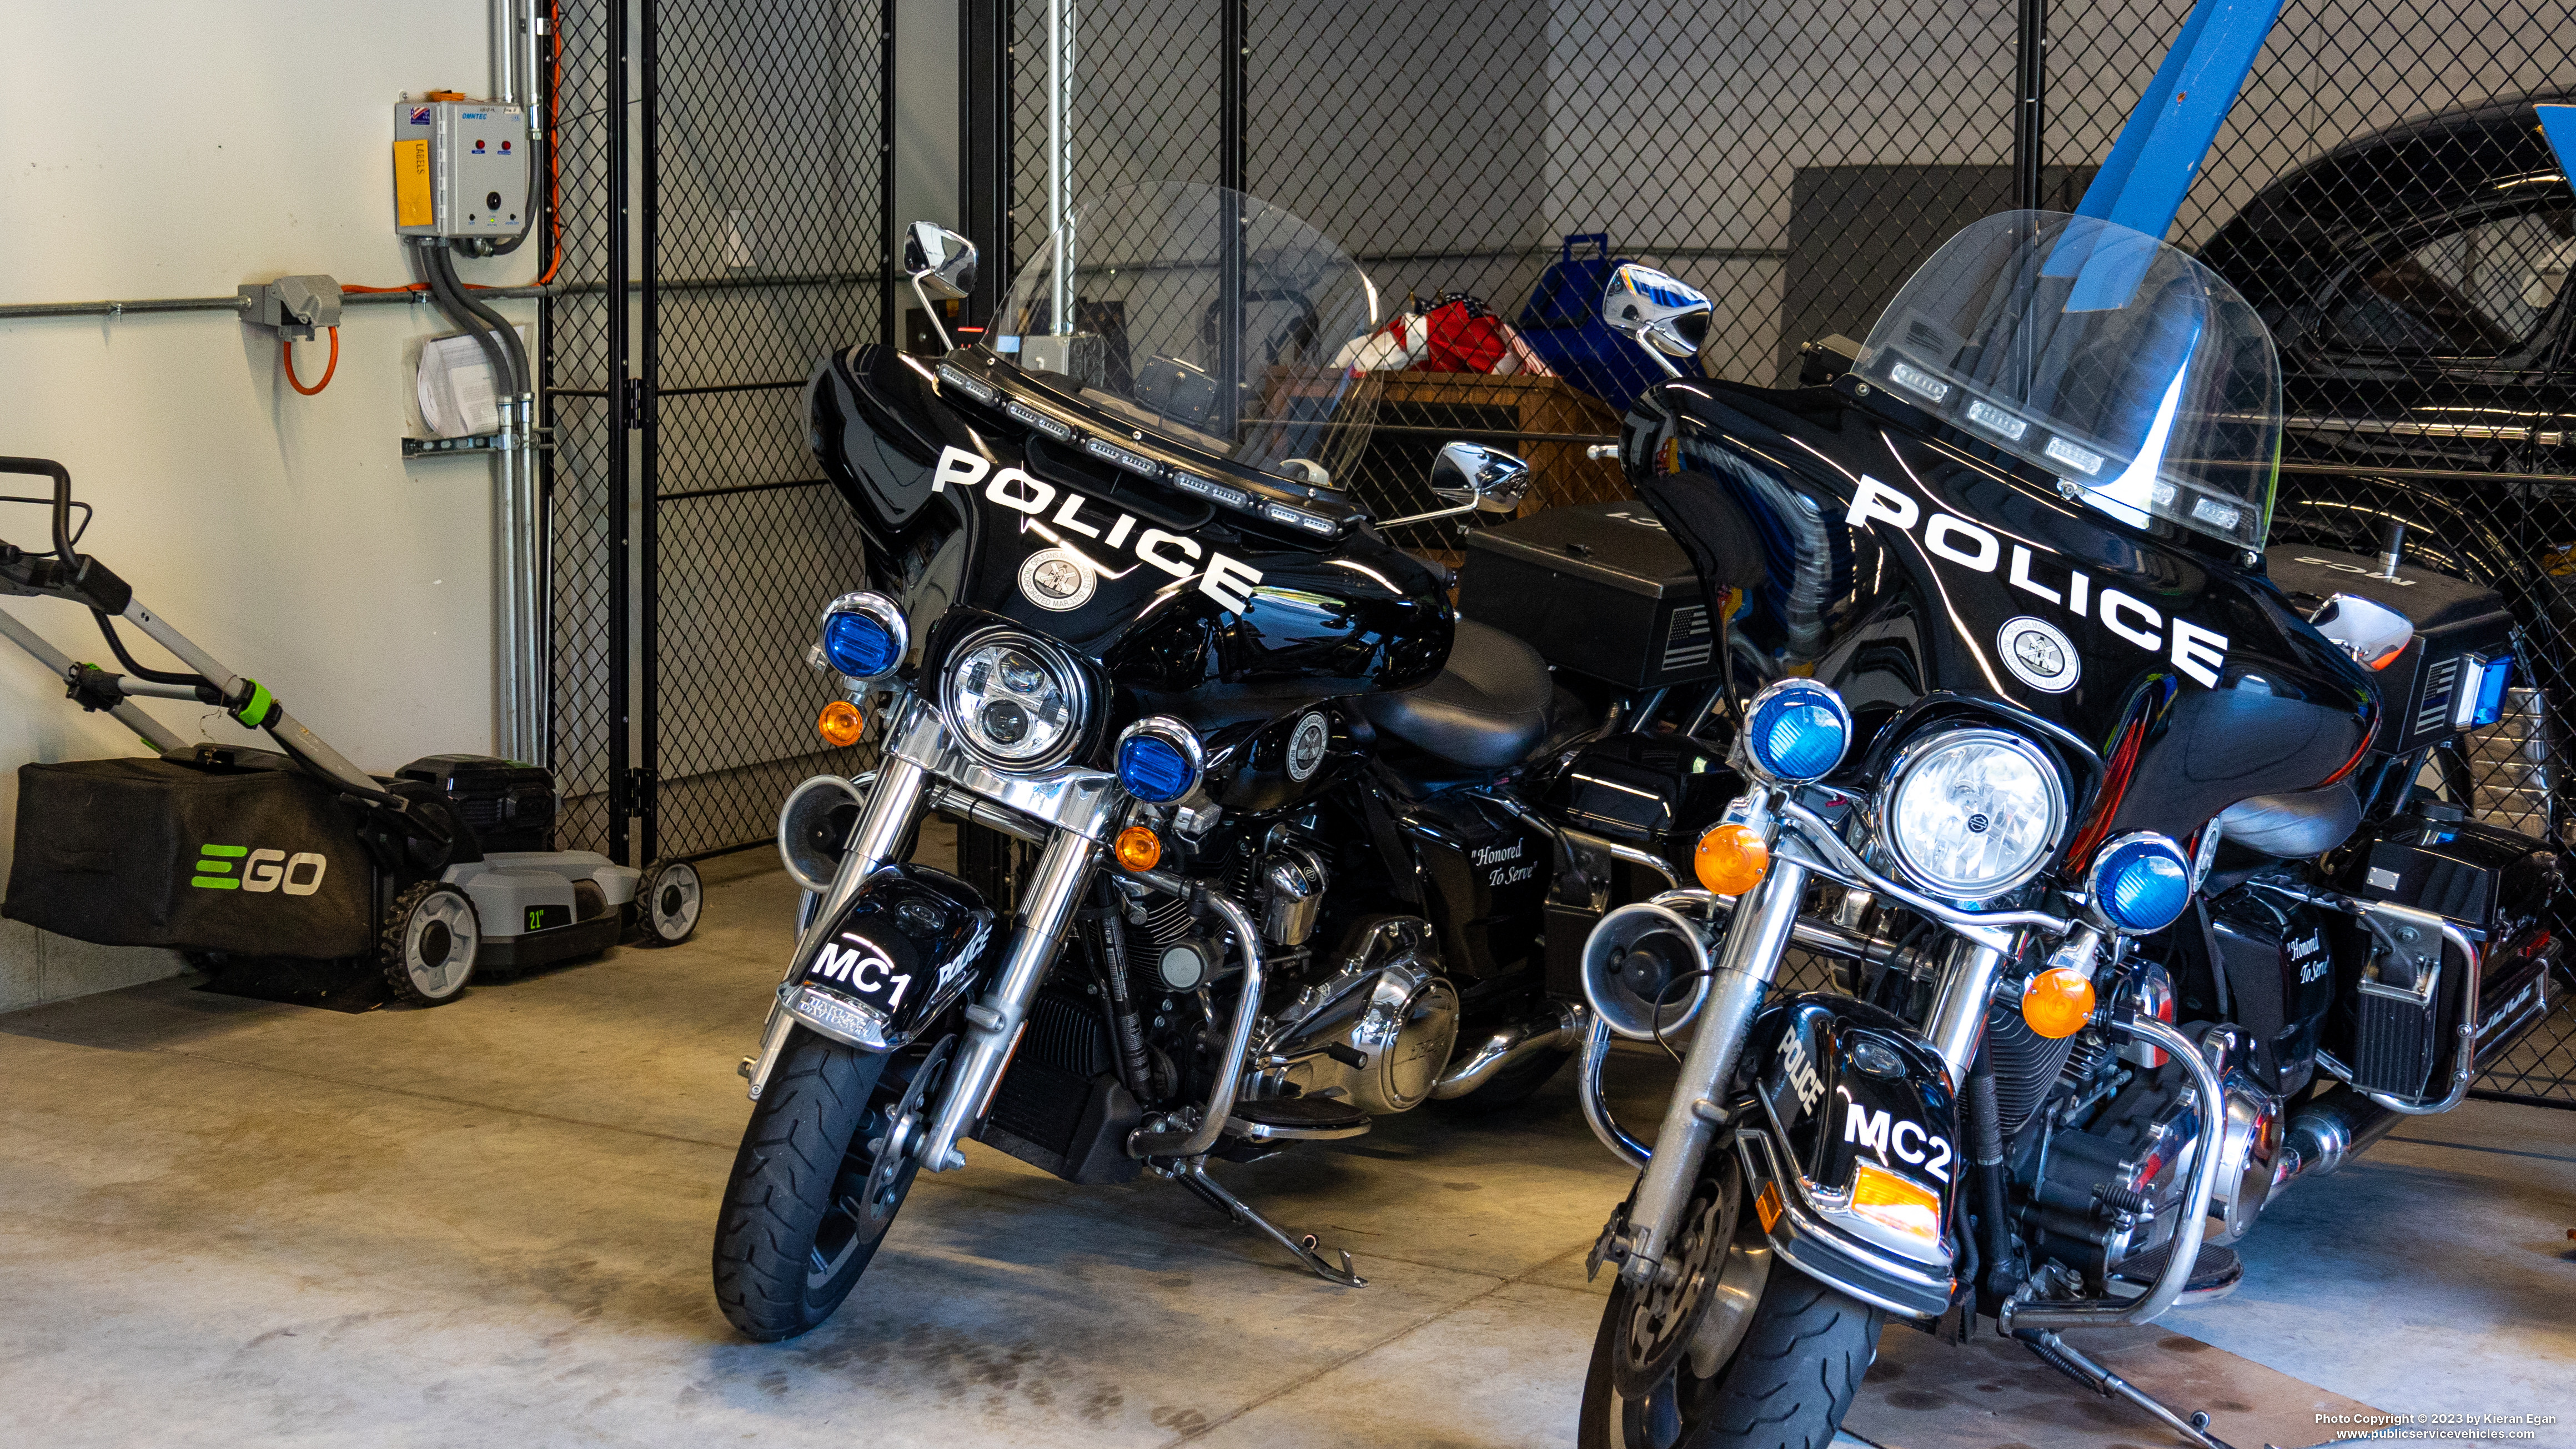 A photo  of Orleans Police
            Motorcycle 1, a 2020-2022 Harley Davidson Electra Glide             taken by Kieran Egan